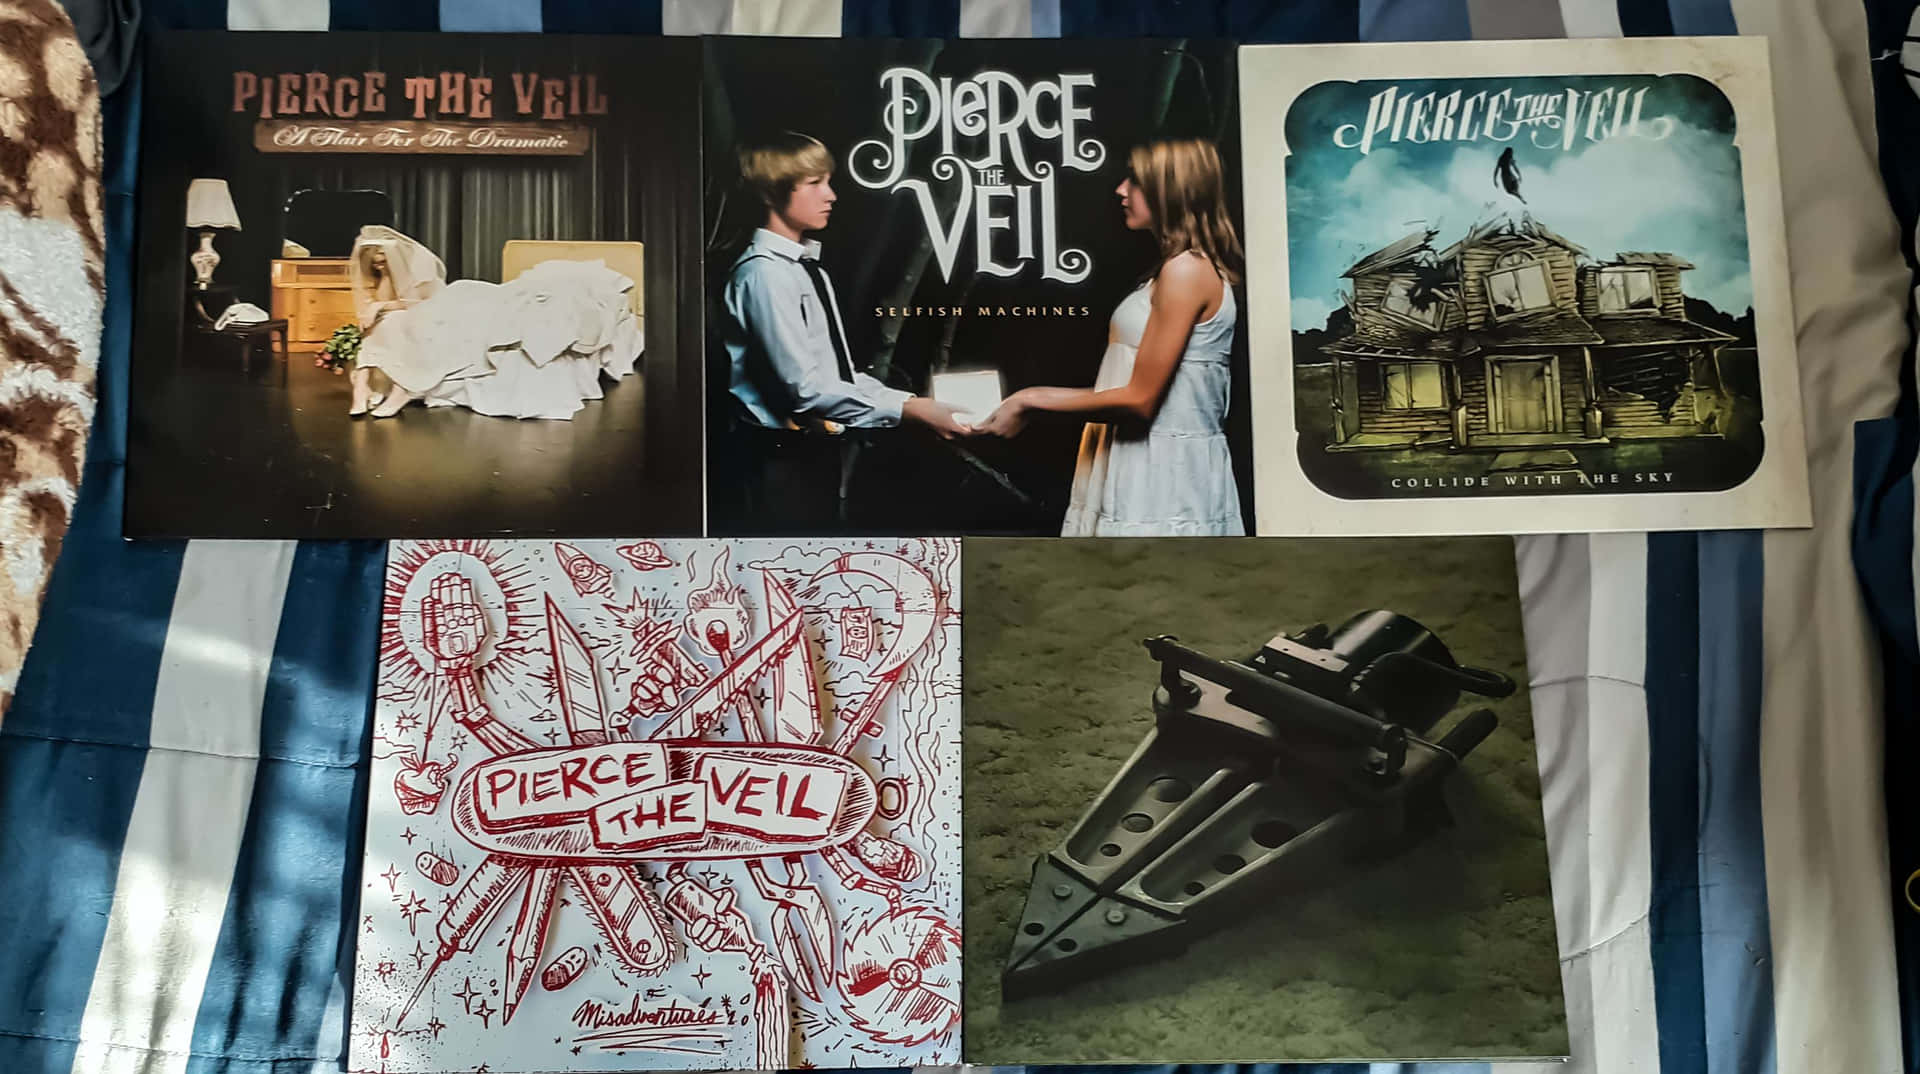 Pierce The Veil Album Covers Collection Wallpaper